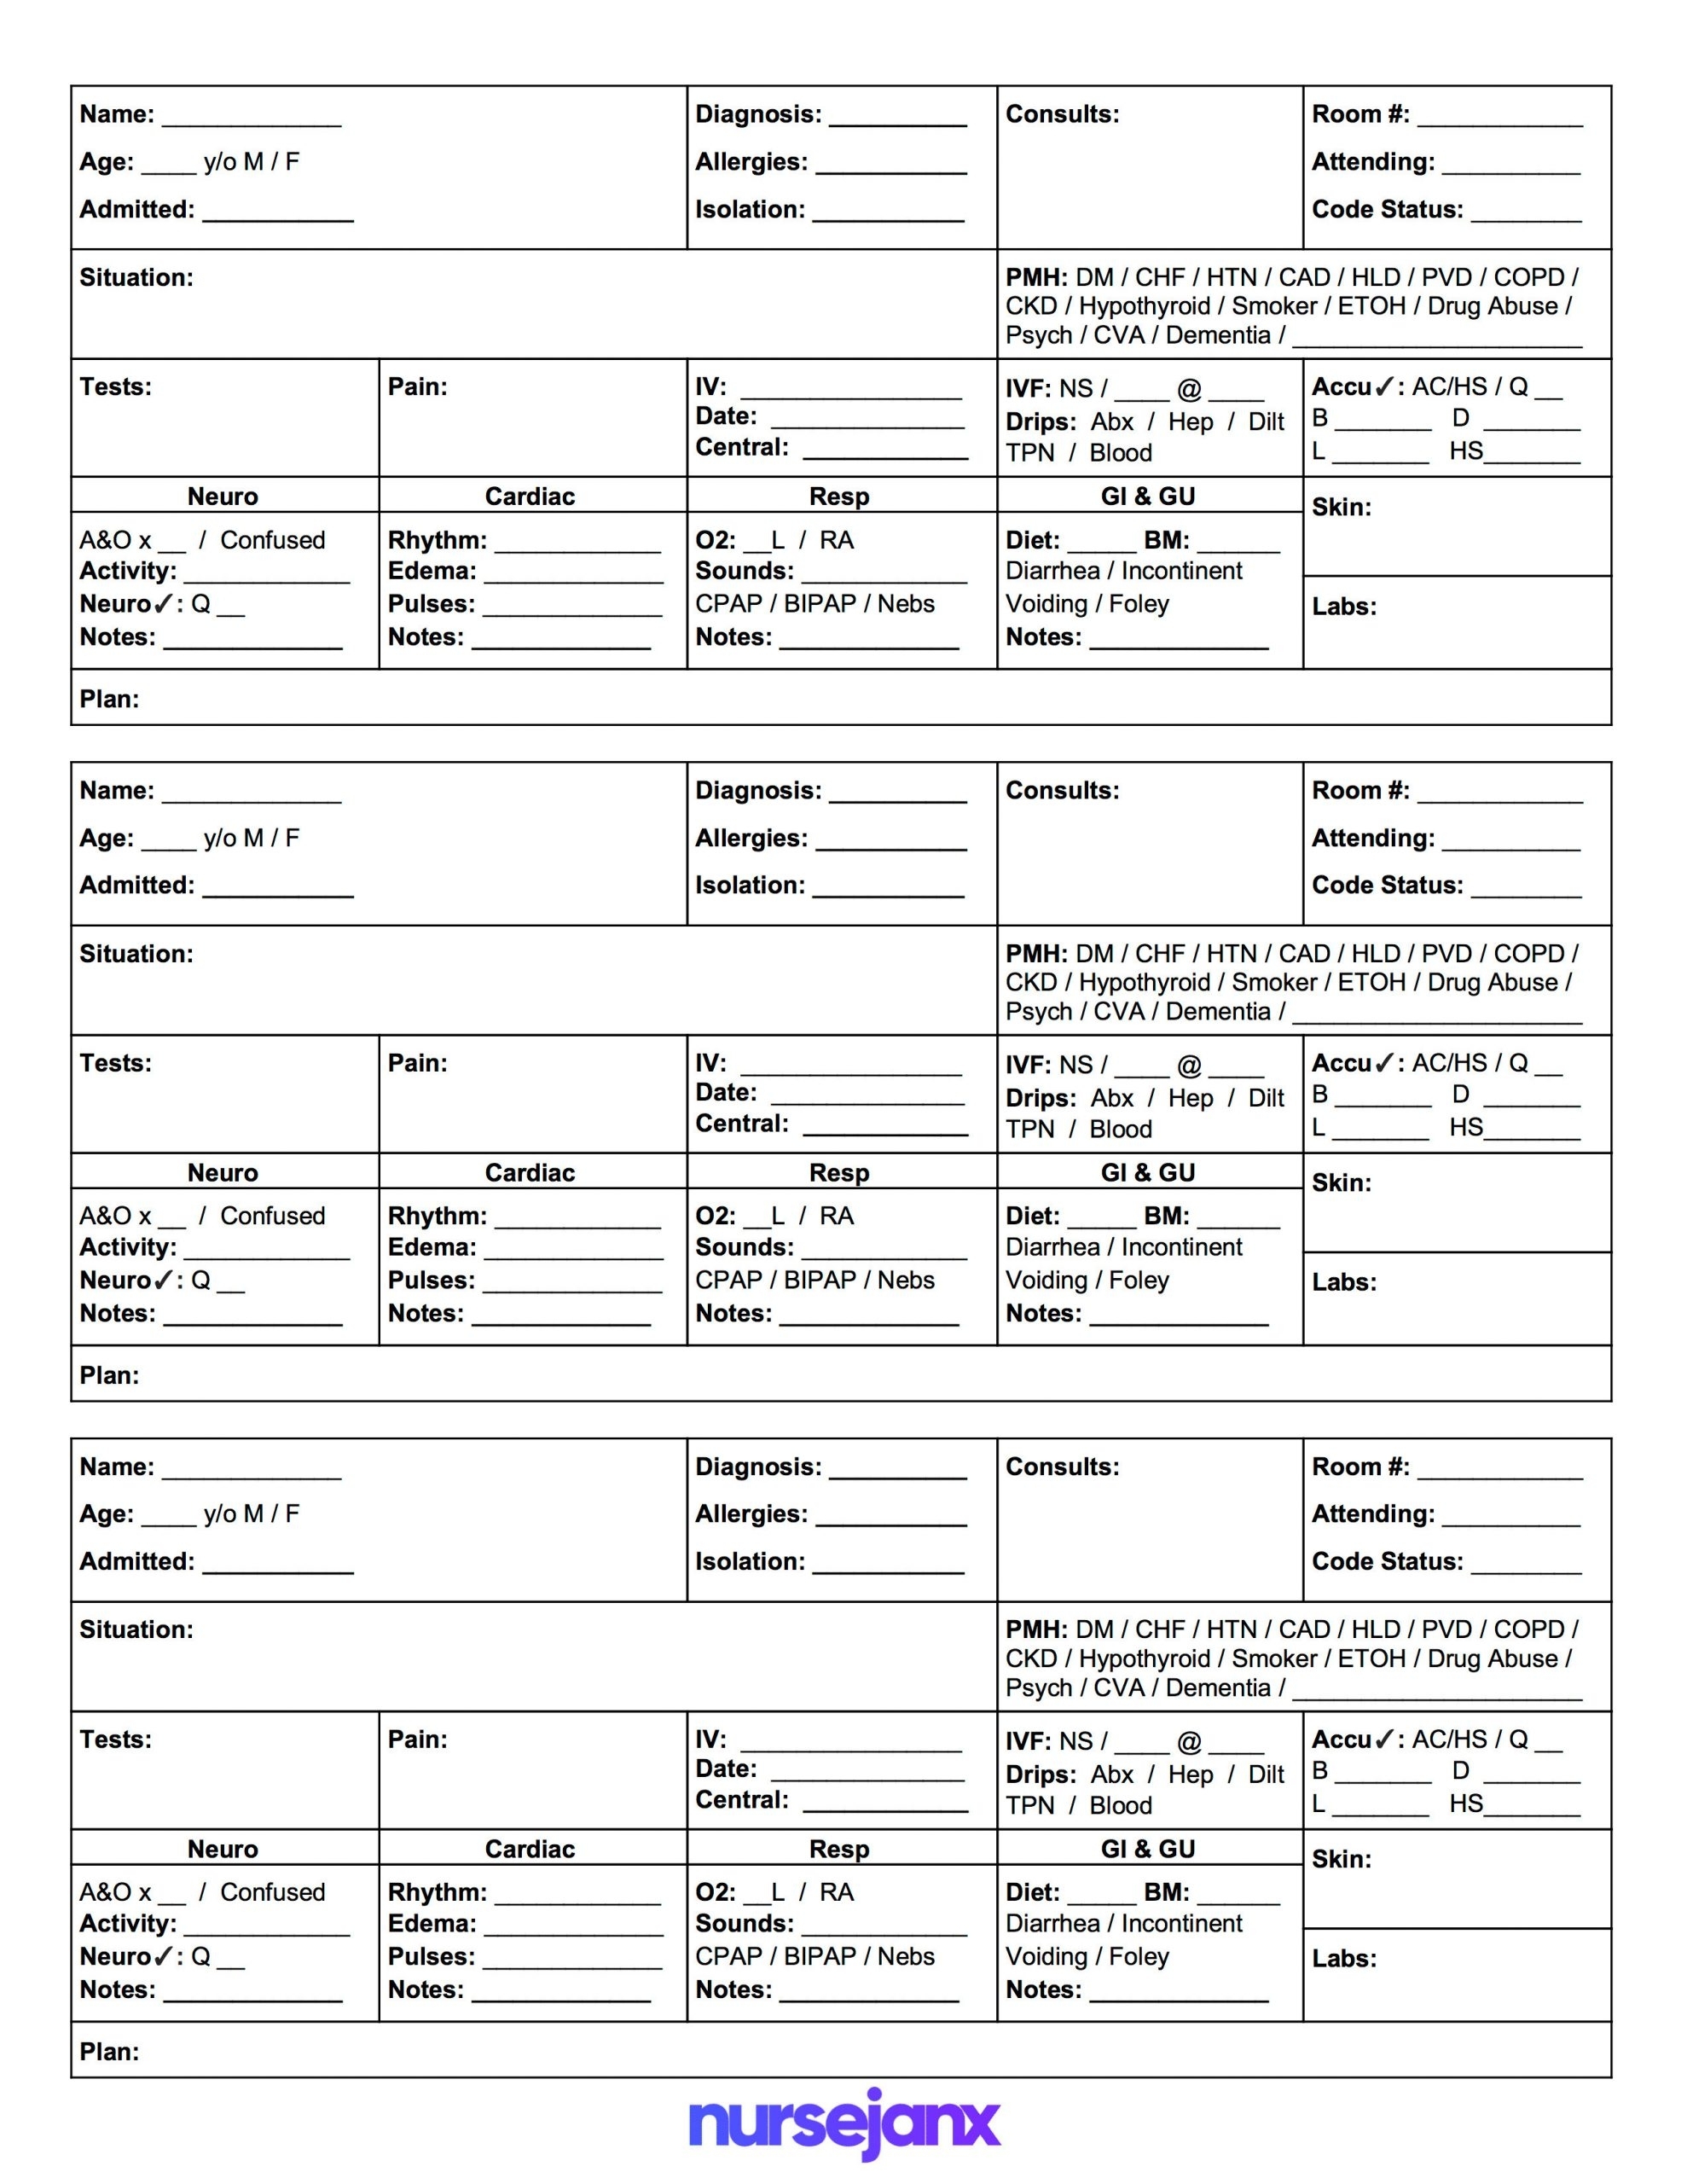 Nursing Shift Report Template | Simple Template Design inside Nurse Shift Report Sheet Template